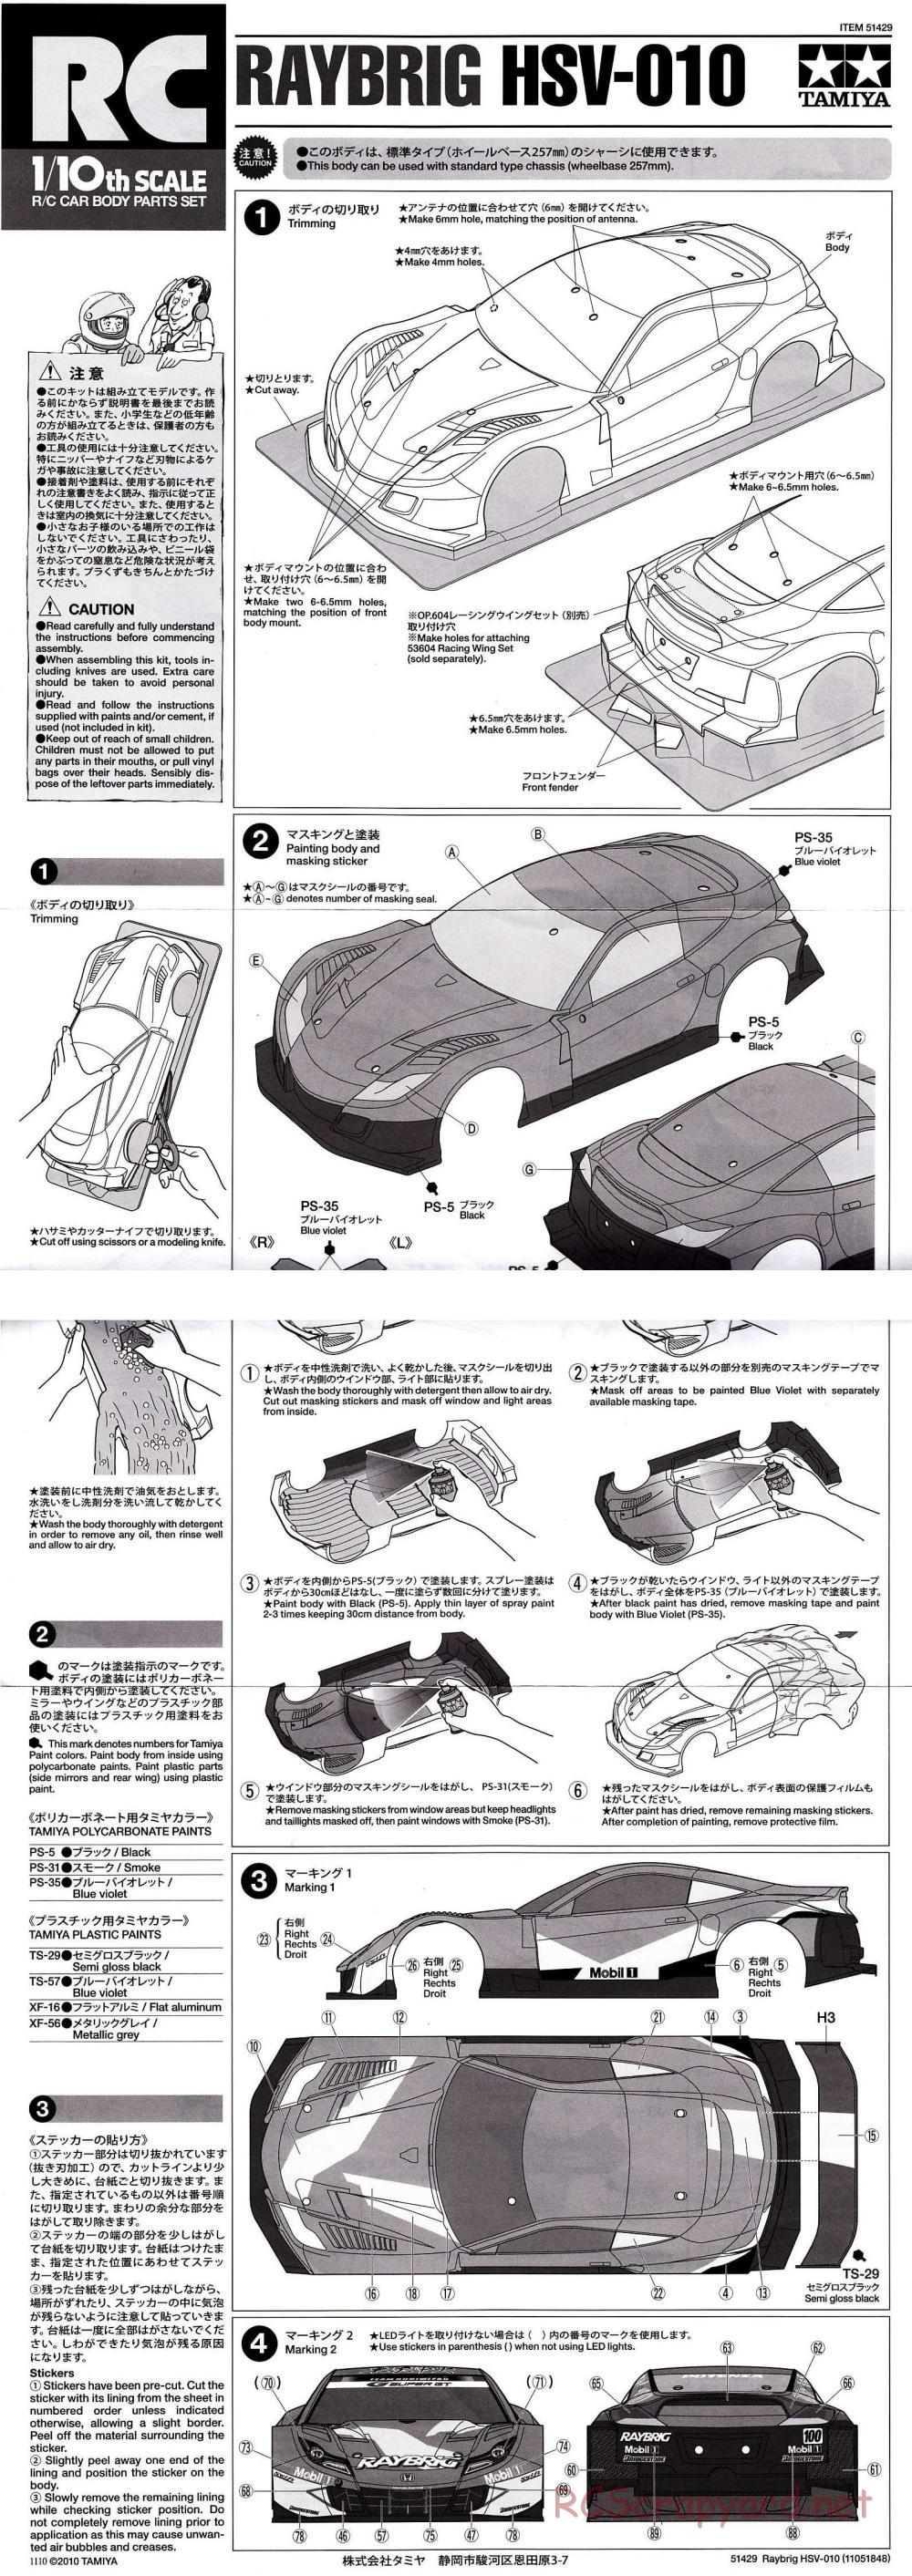 Tamiya - Raybrig HSV-010 - TA05 Ver.II Chassis - Body Manual - Page 1